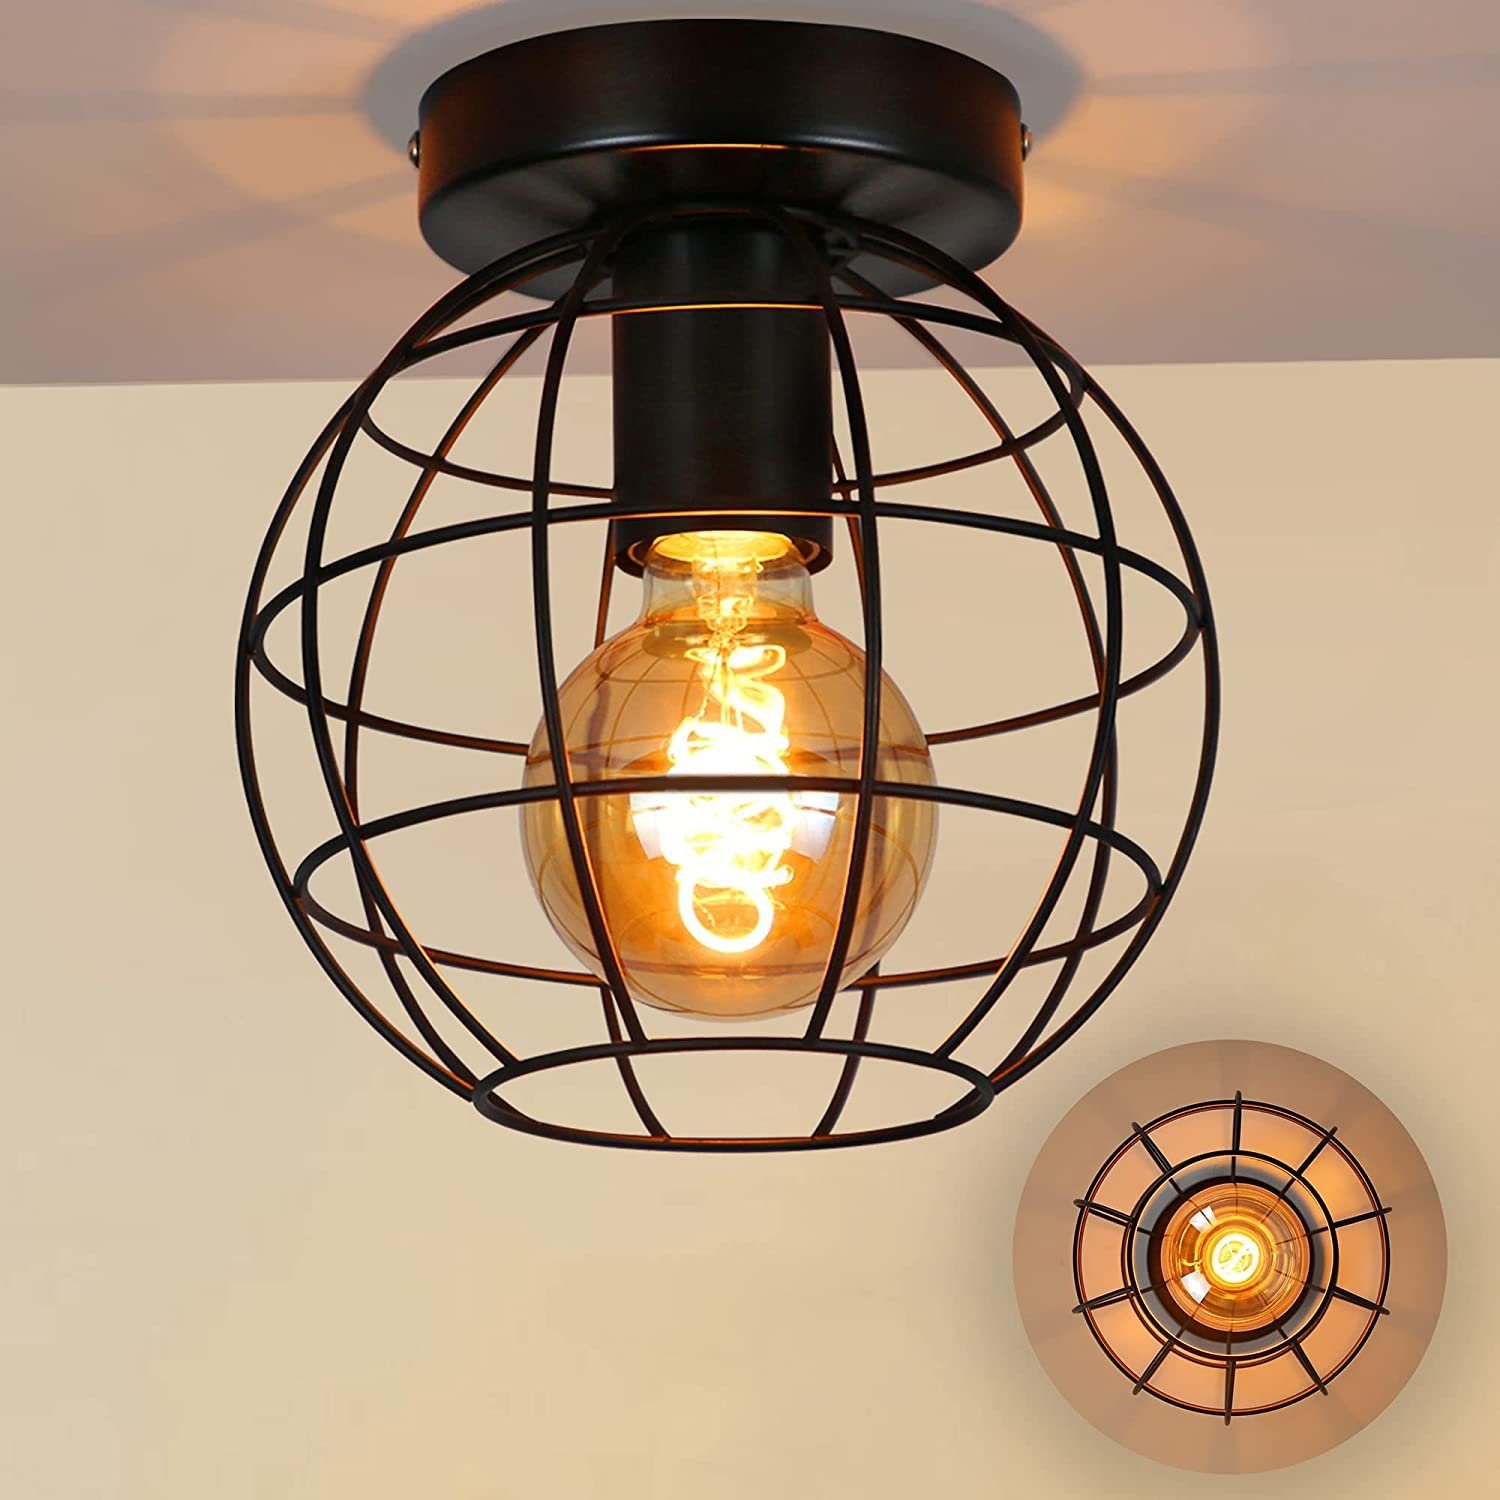 LED Retro Decken Leuchte Holz Filament Lampe Flur Küchen Beleuchtung schwarz 